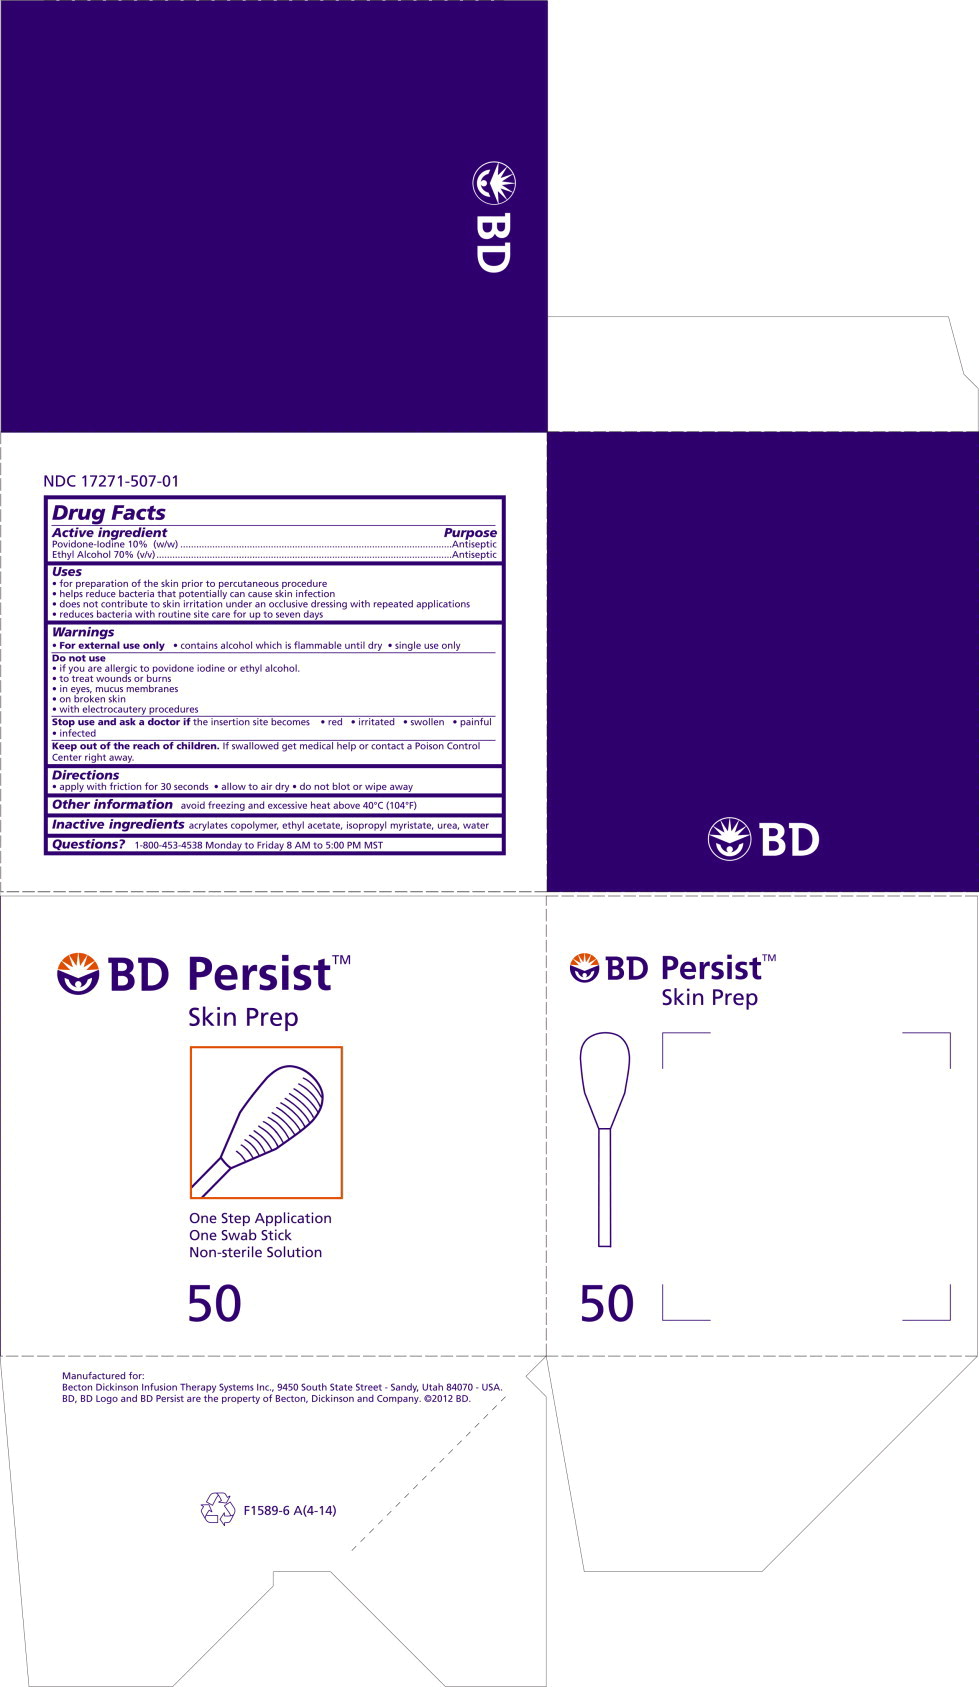 Principal Display Panel – Carton Label
